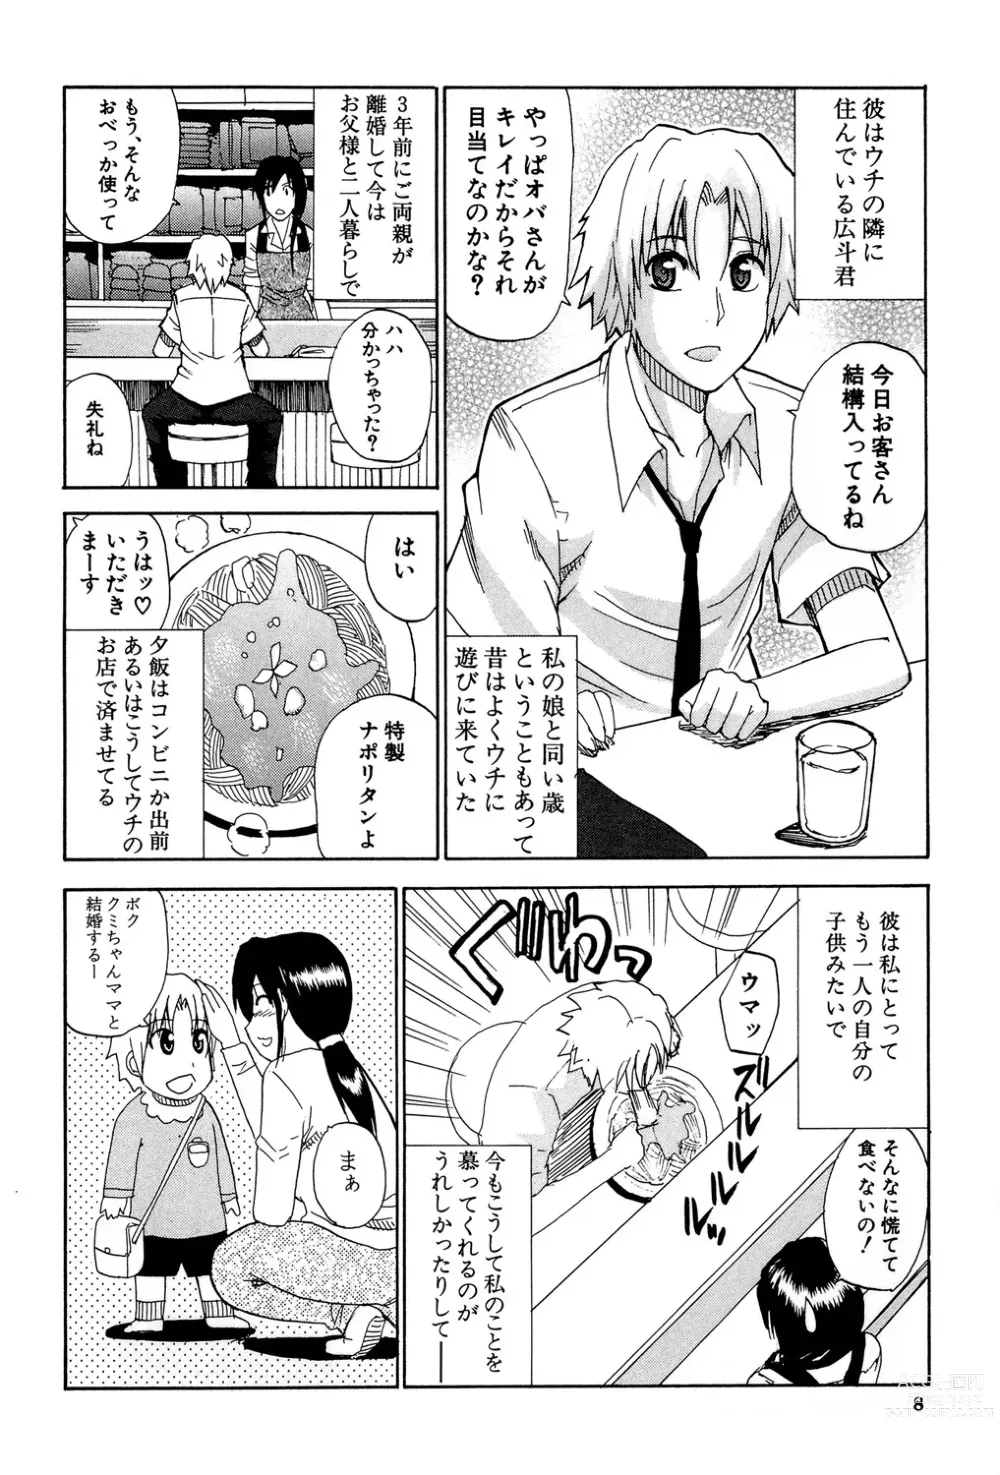 Page 7 of manga Venus Rhapsody